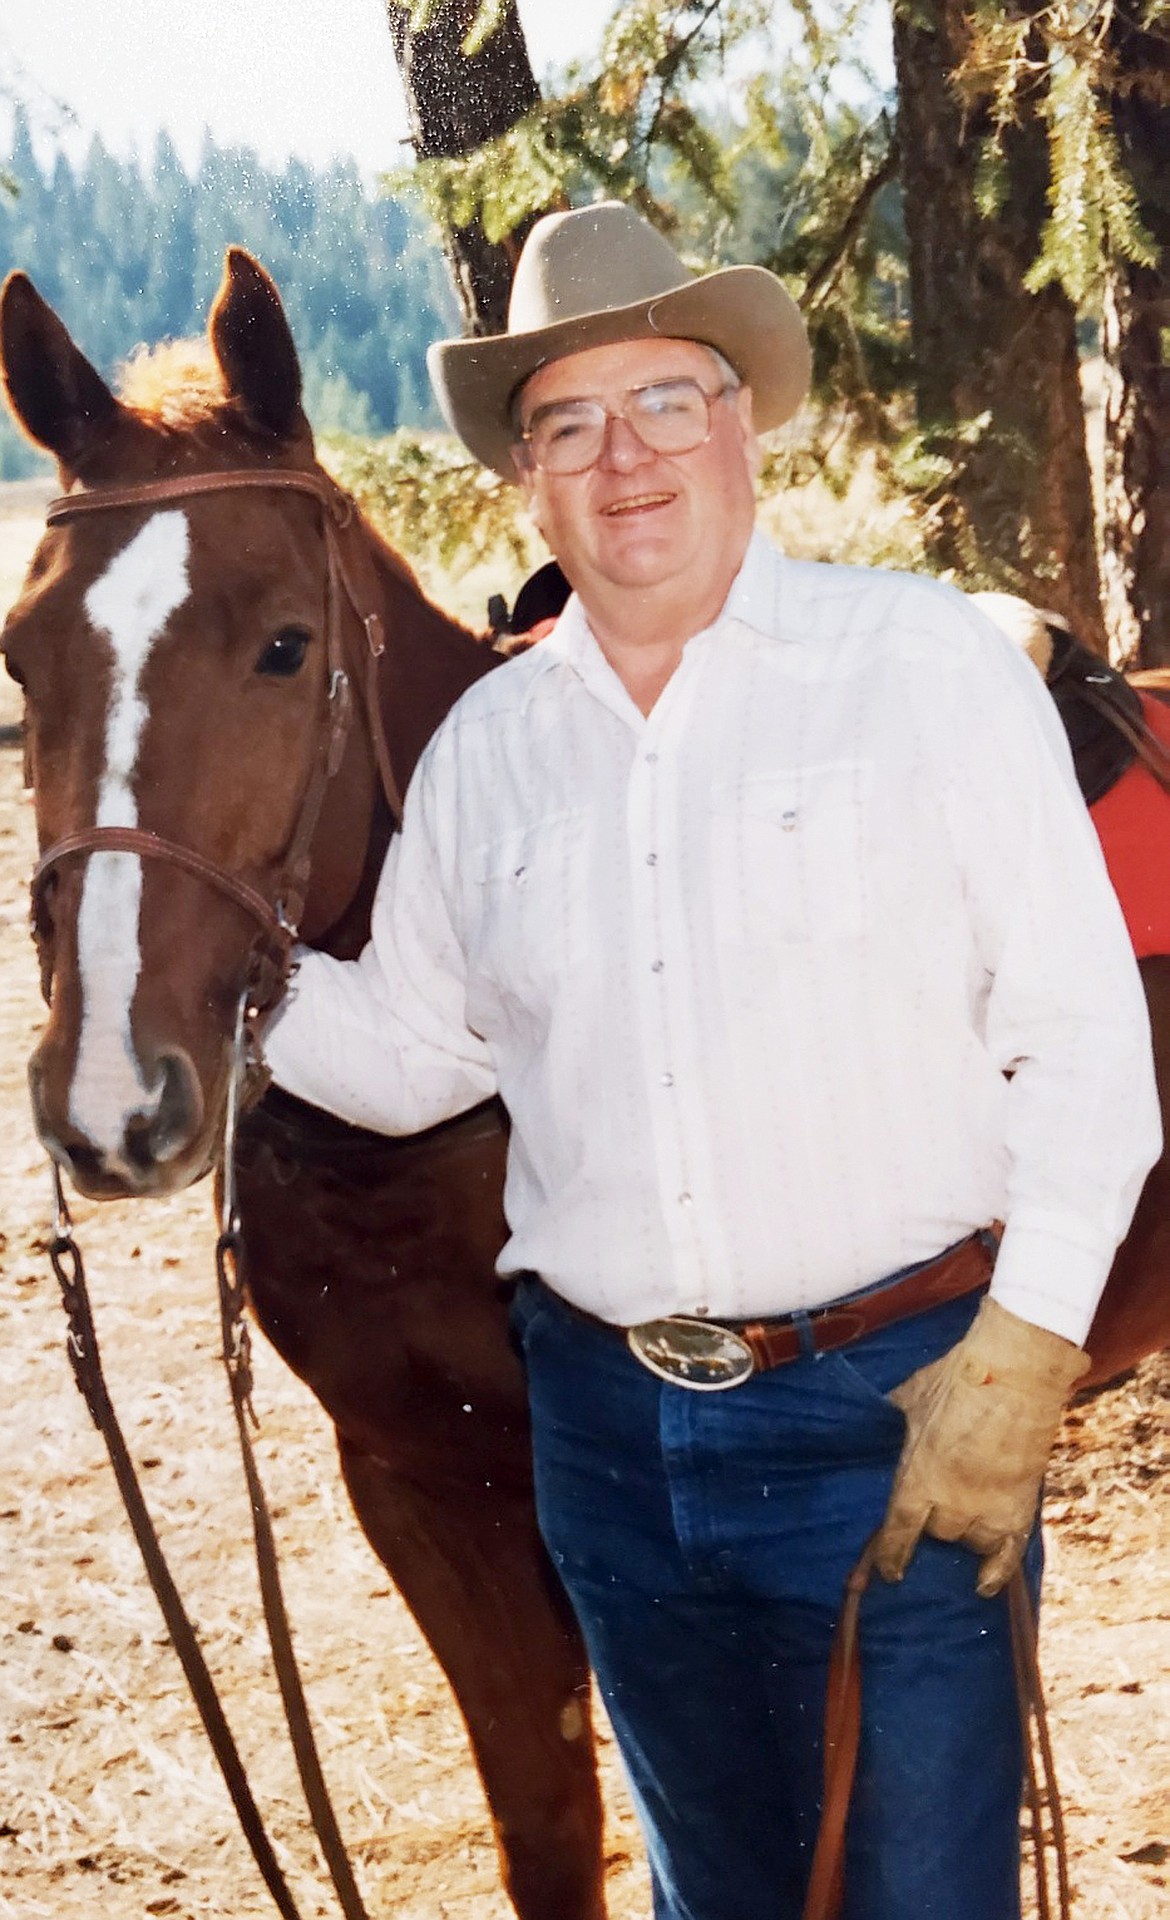 Photos courtesy Debra Compton Olson
Dick Compton at his North Idaho property with one of his horses.